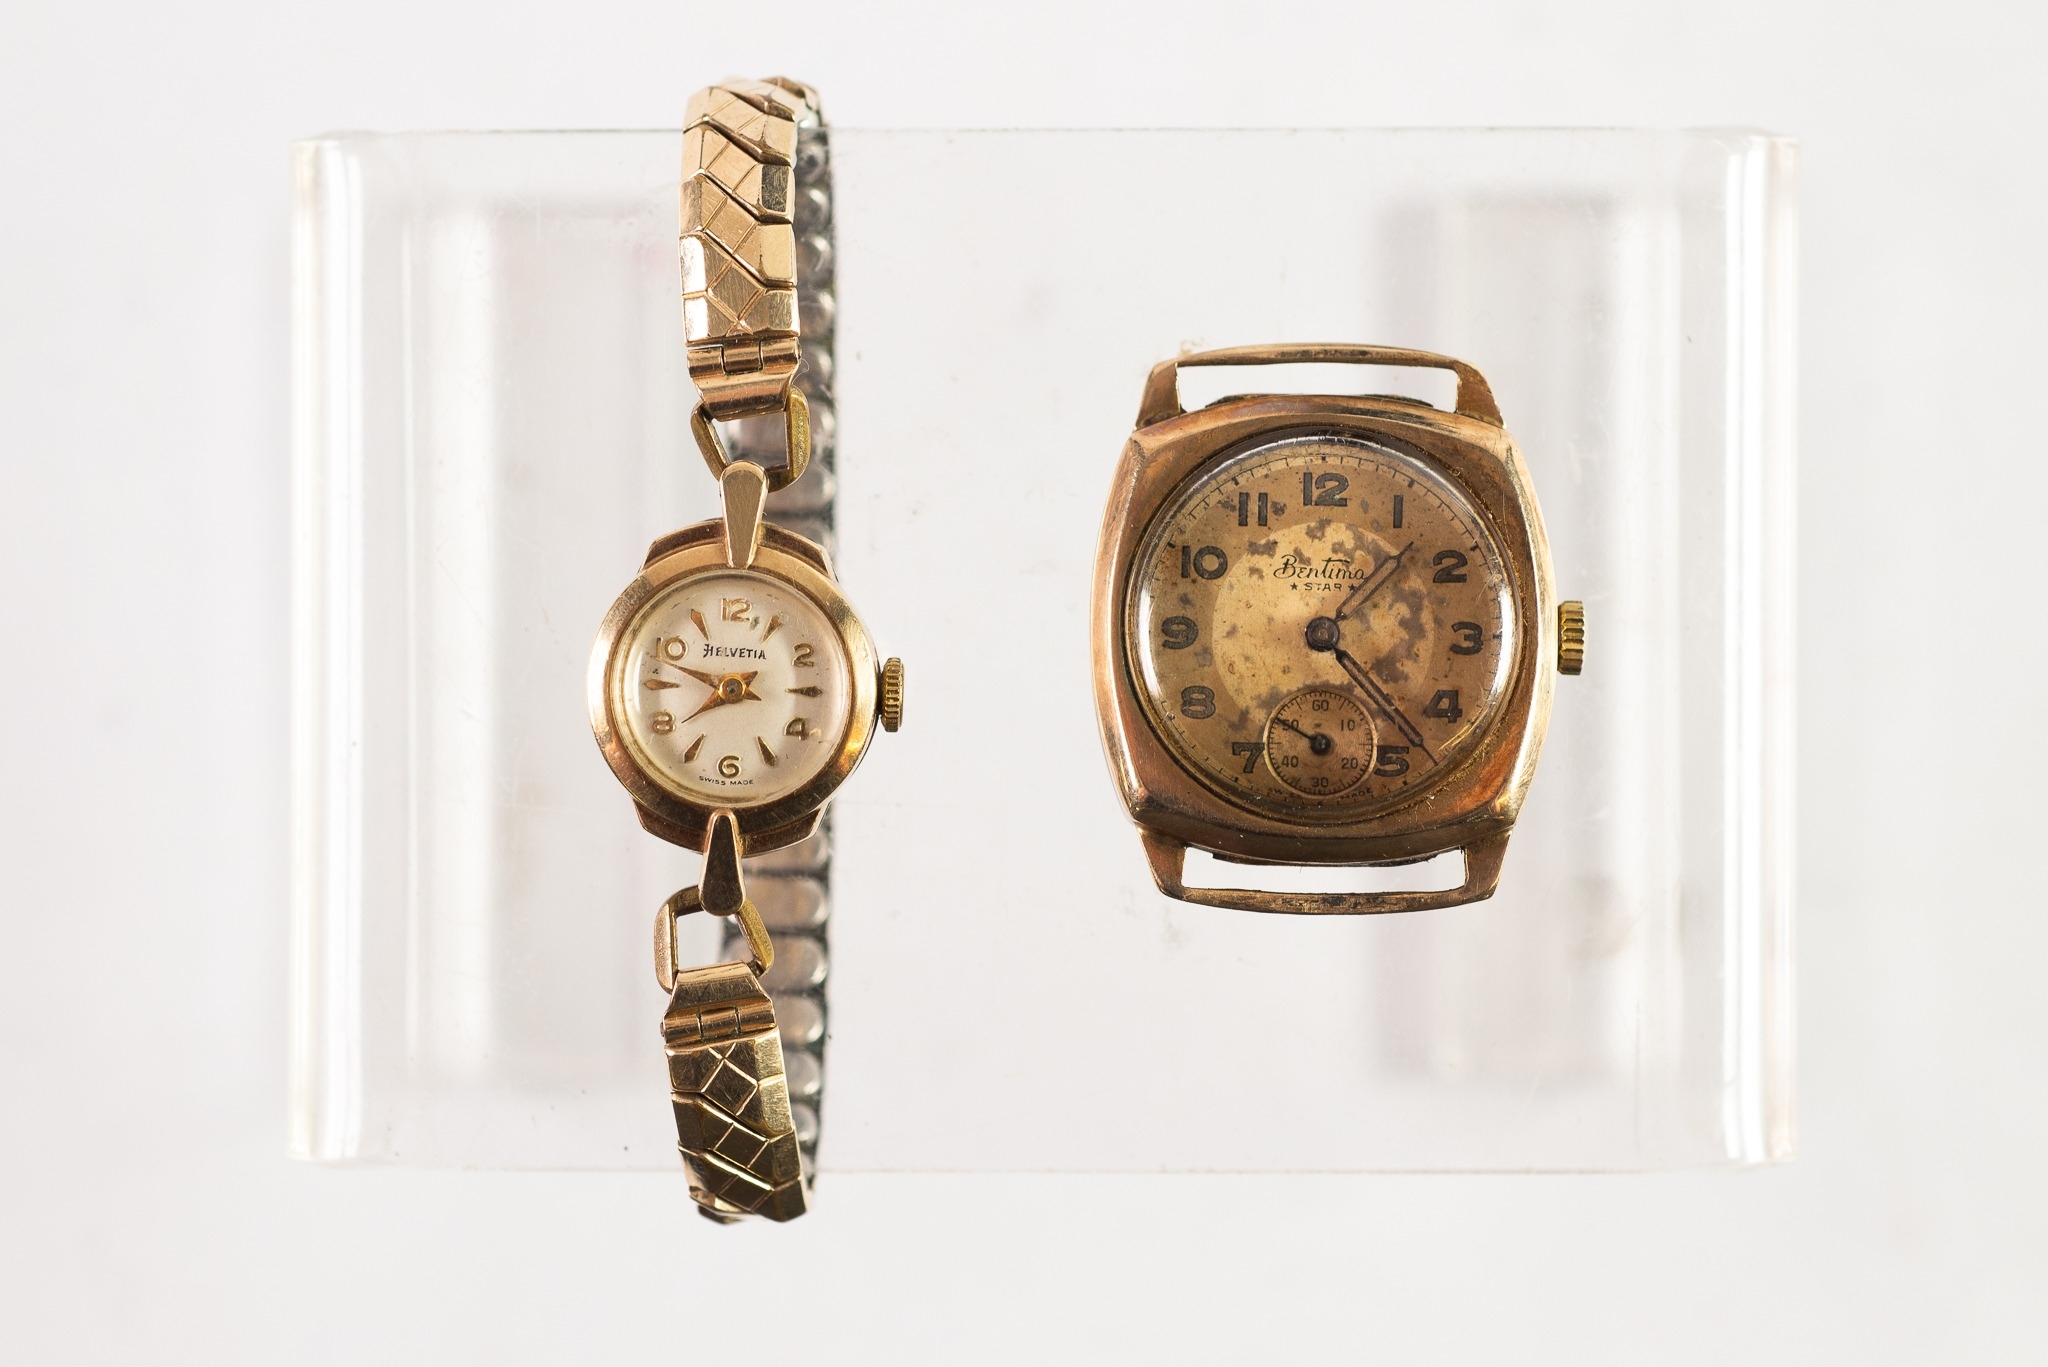 BENTIMA STAR GENTLEMAN'S 9CT GOLD CASED WRIST WATCH with 15 jewels movement, circular arabic dial